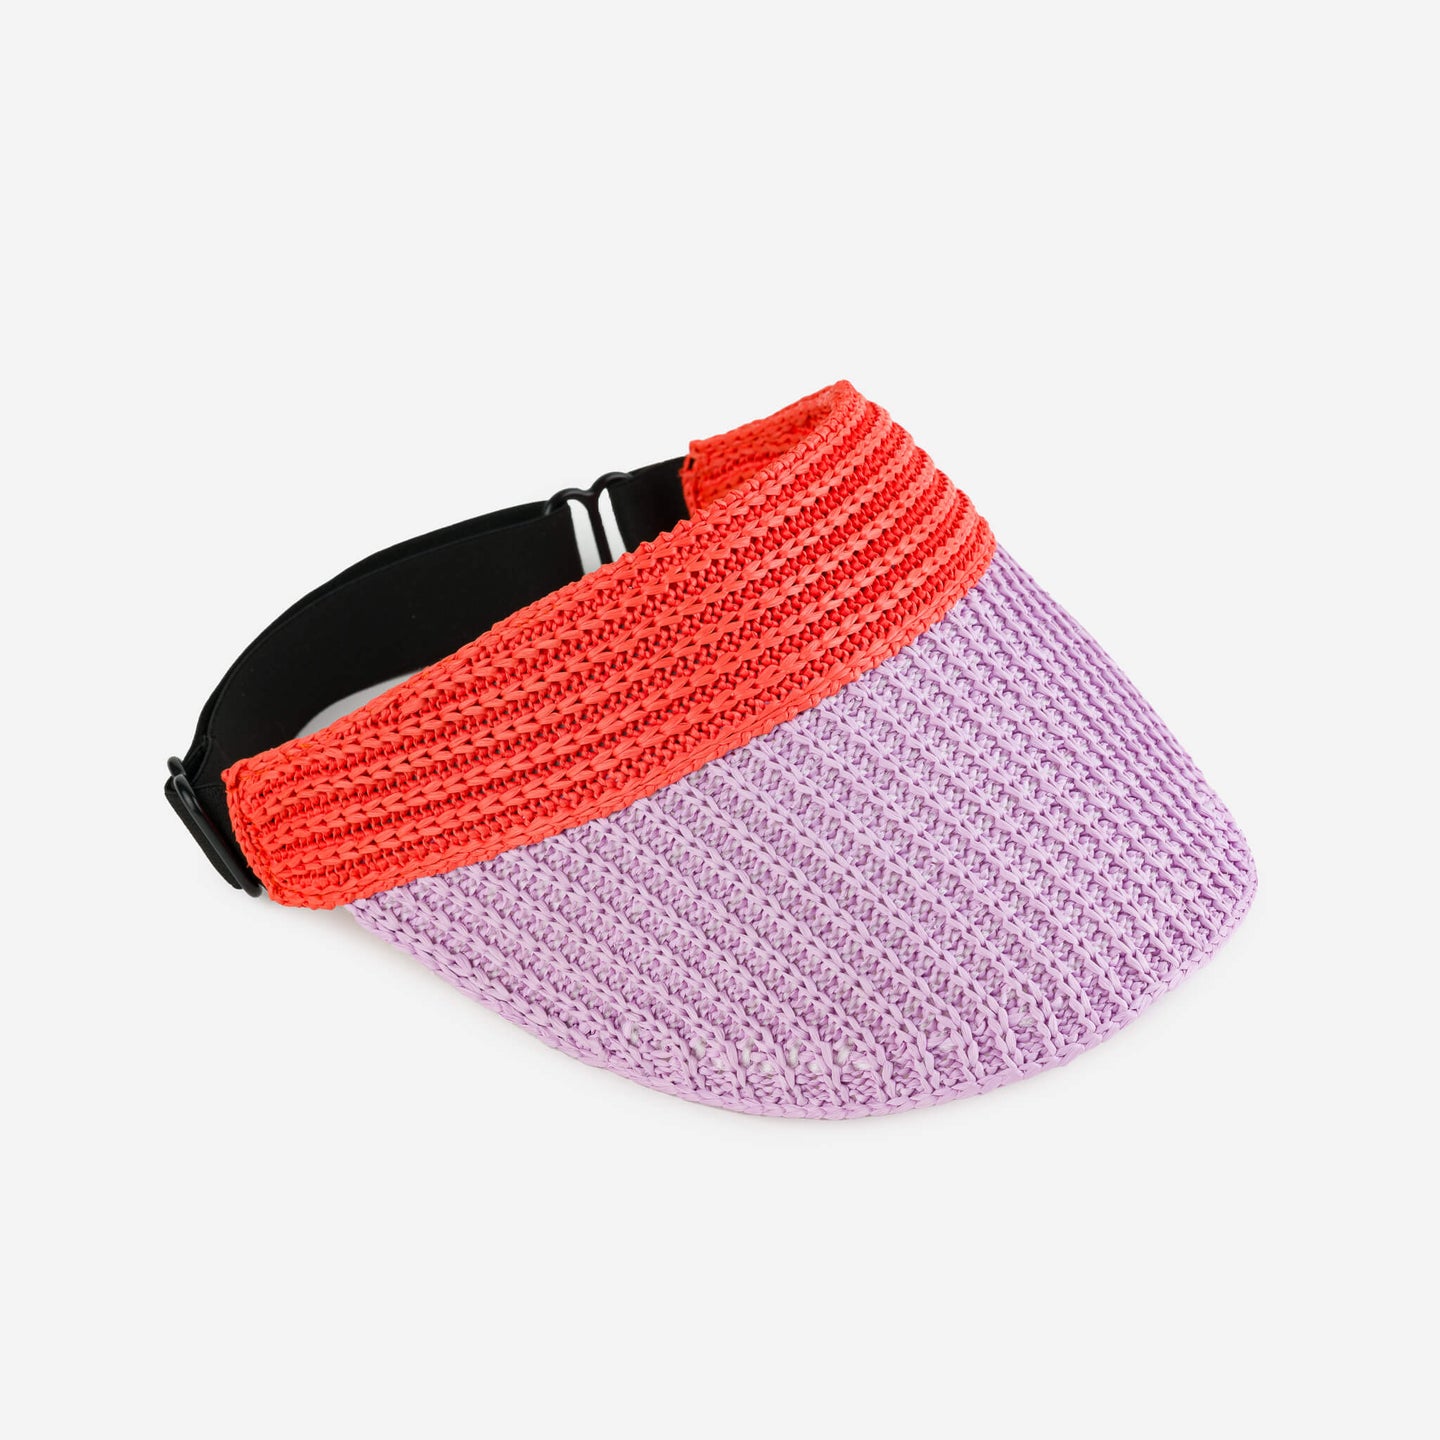 Raffia Visor Sporty Colorful Small Hat Blocks Sun Adjustable Strap Sporty Active